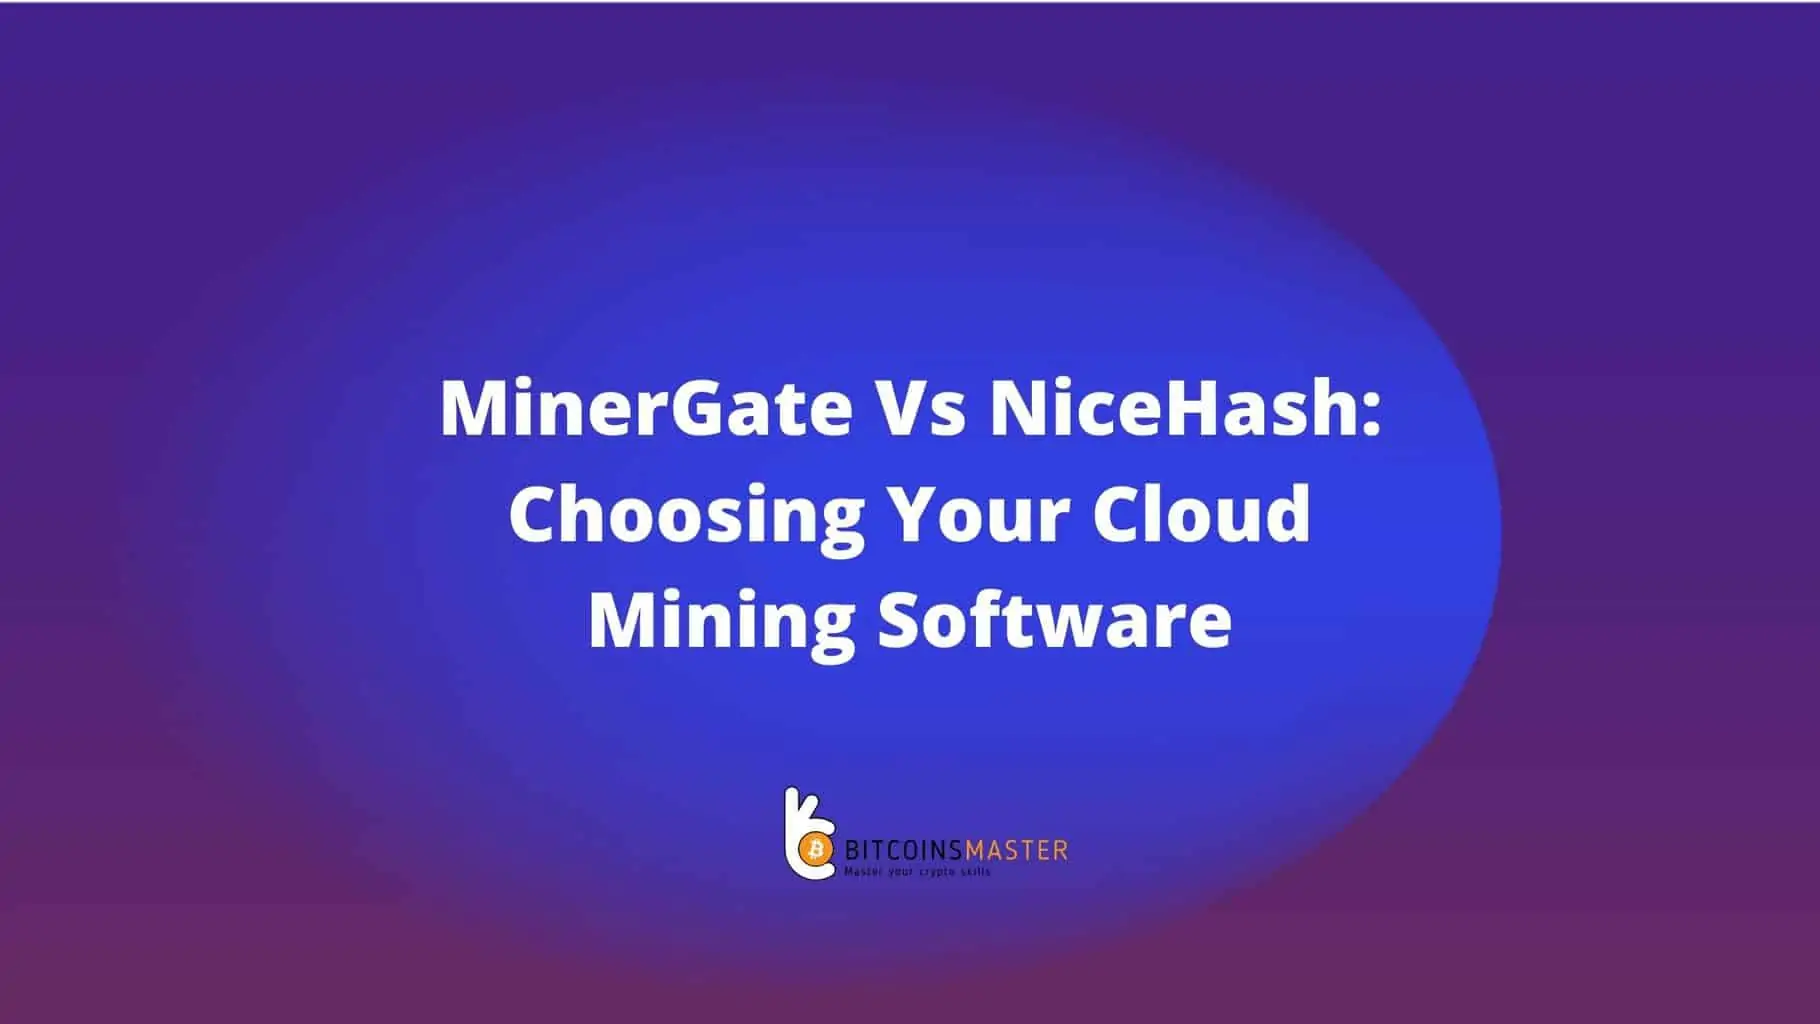 Minergate vs. Nicehash: Die Wahl Ihrer Cloud Mining Software